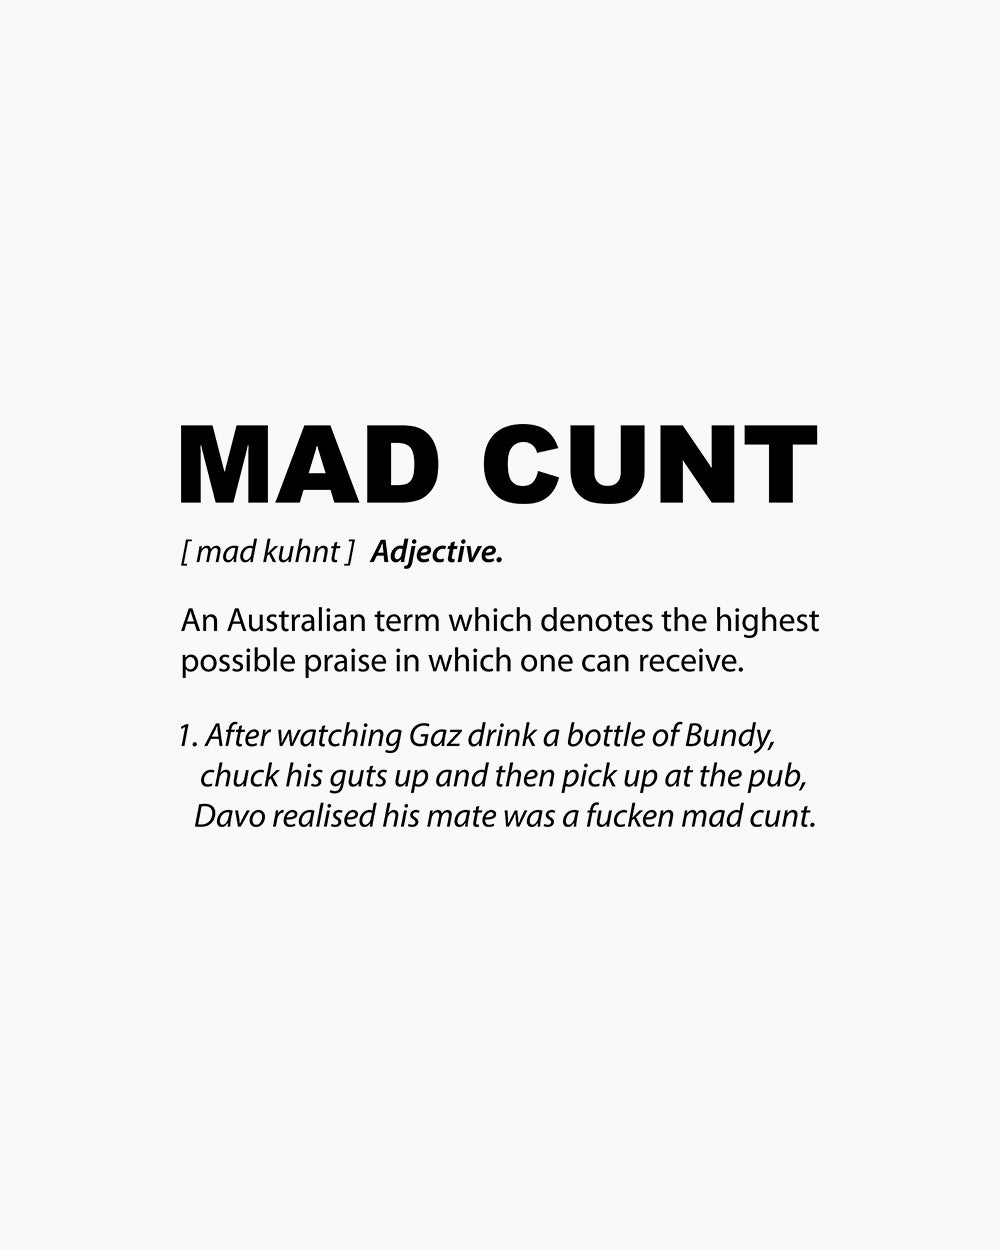 Mad Cunt Hoodie Australia Online #colour_white